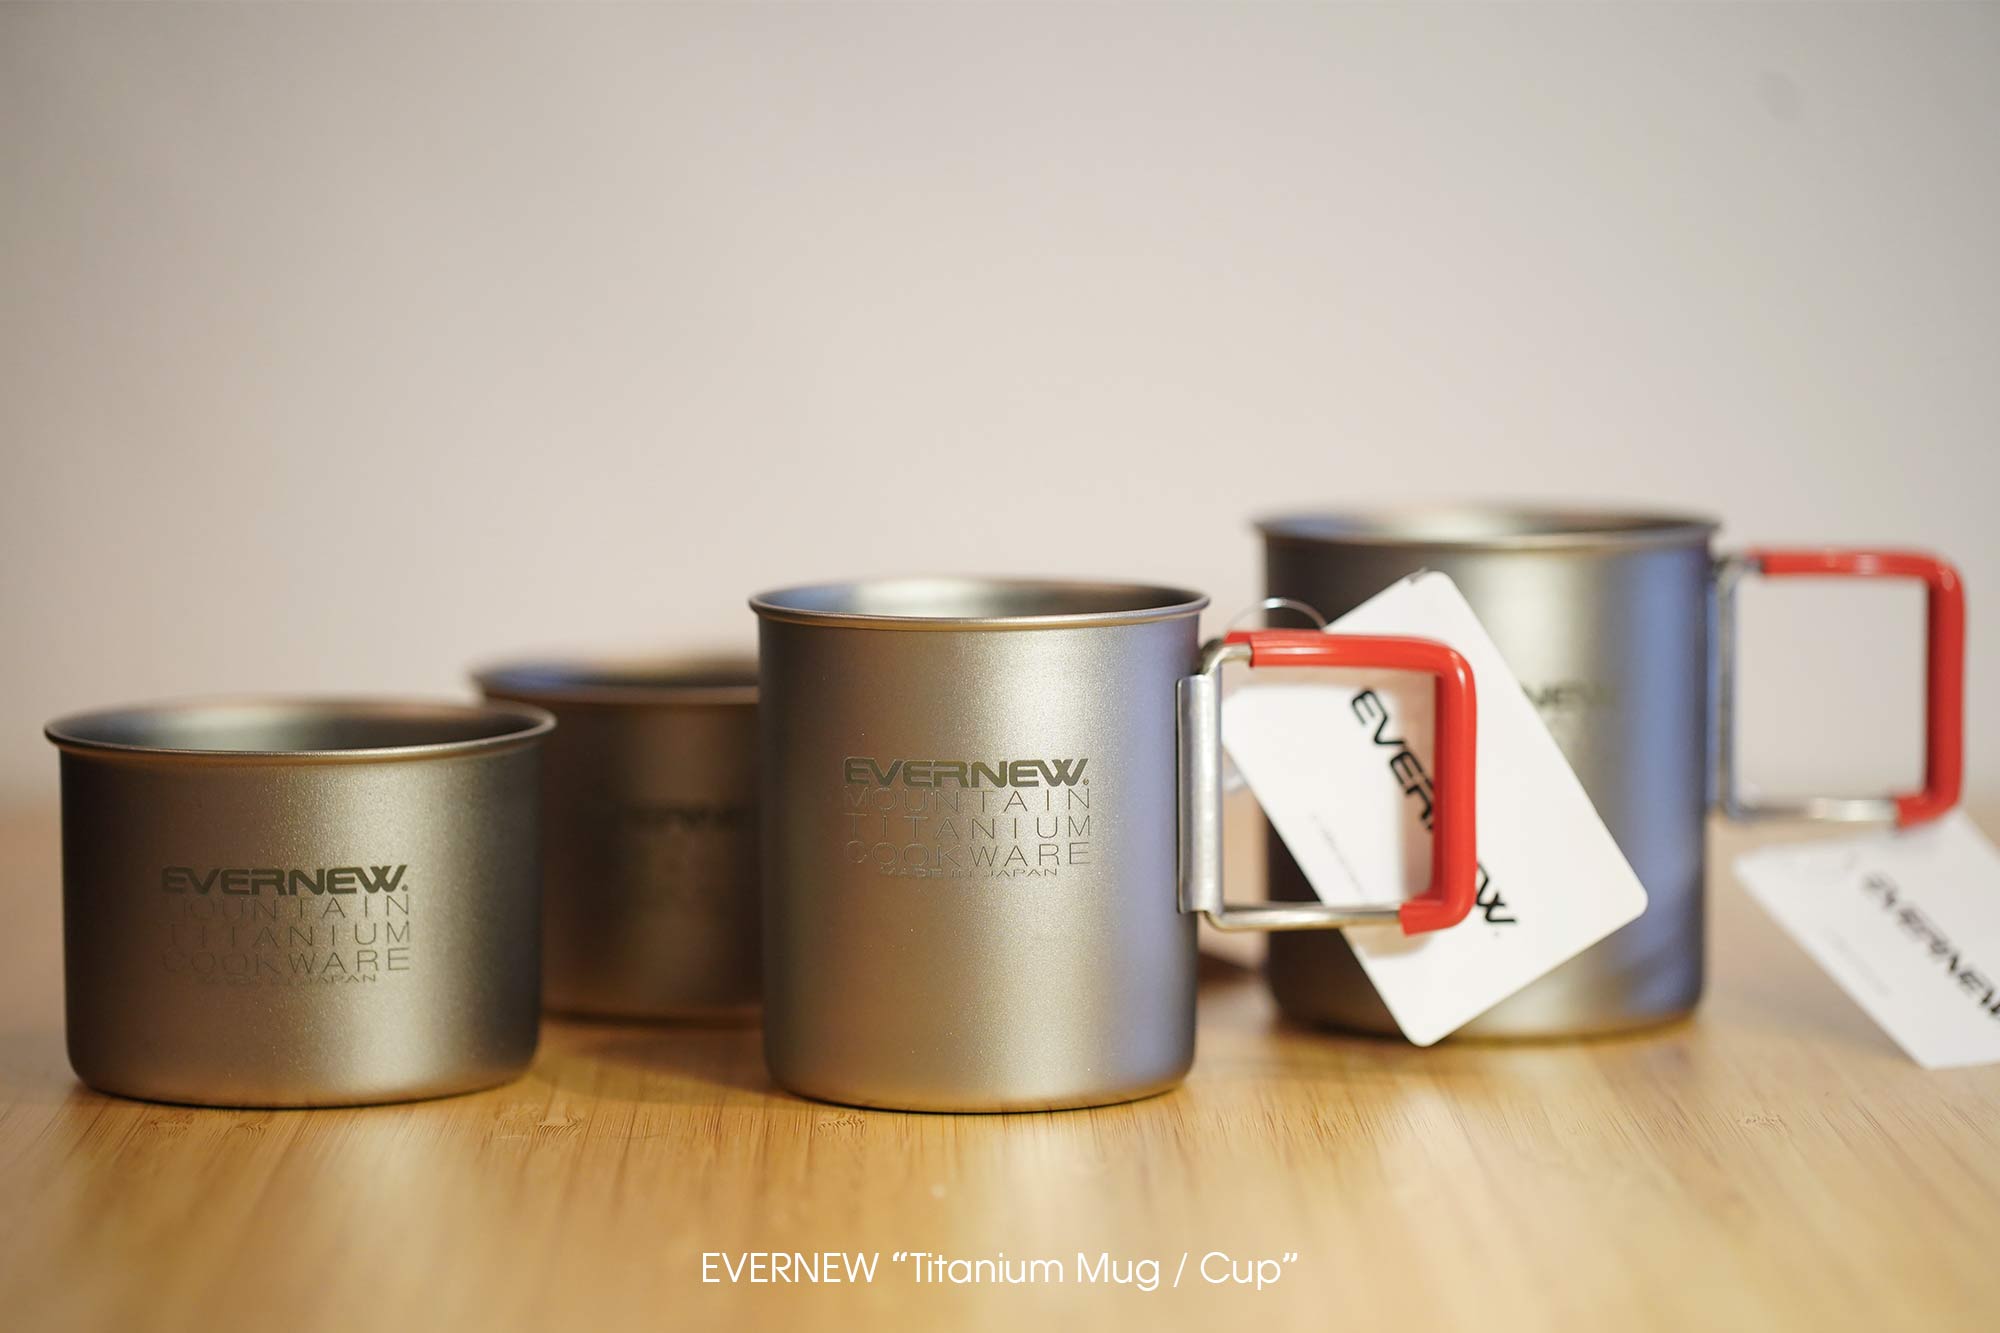 EVERNEW "Titanium Mug / Cup"